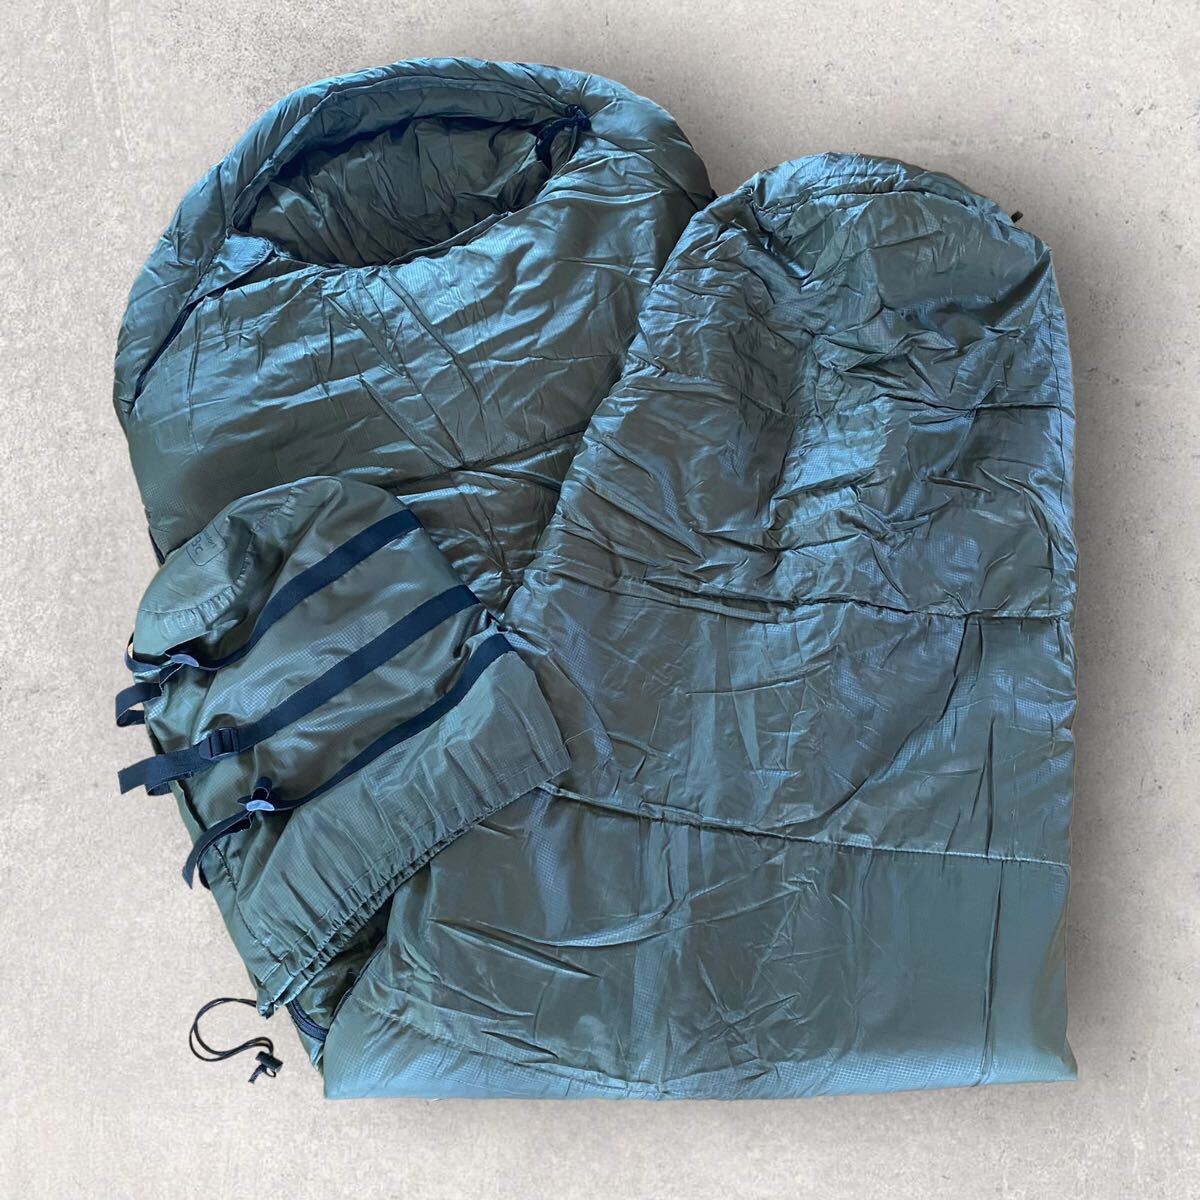 APORITO アポリト マミー型シュラフ 寝袋 アウトドア用品 キャンプ用品 SLEEPING BAG ダブルファスナー 230cm _画像1